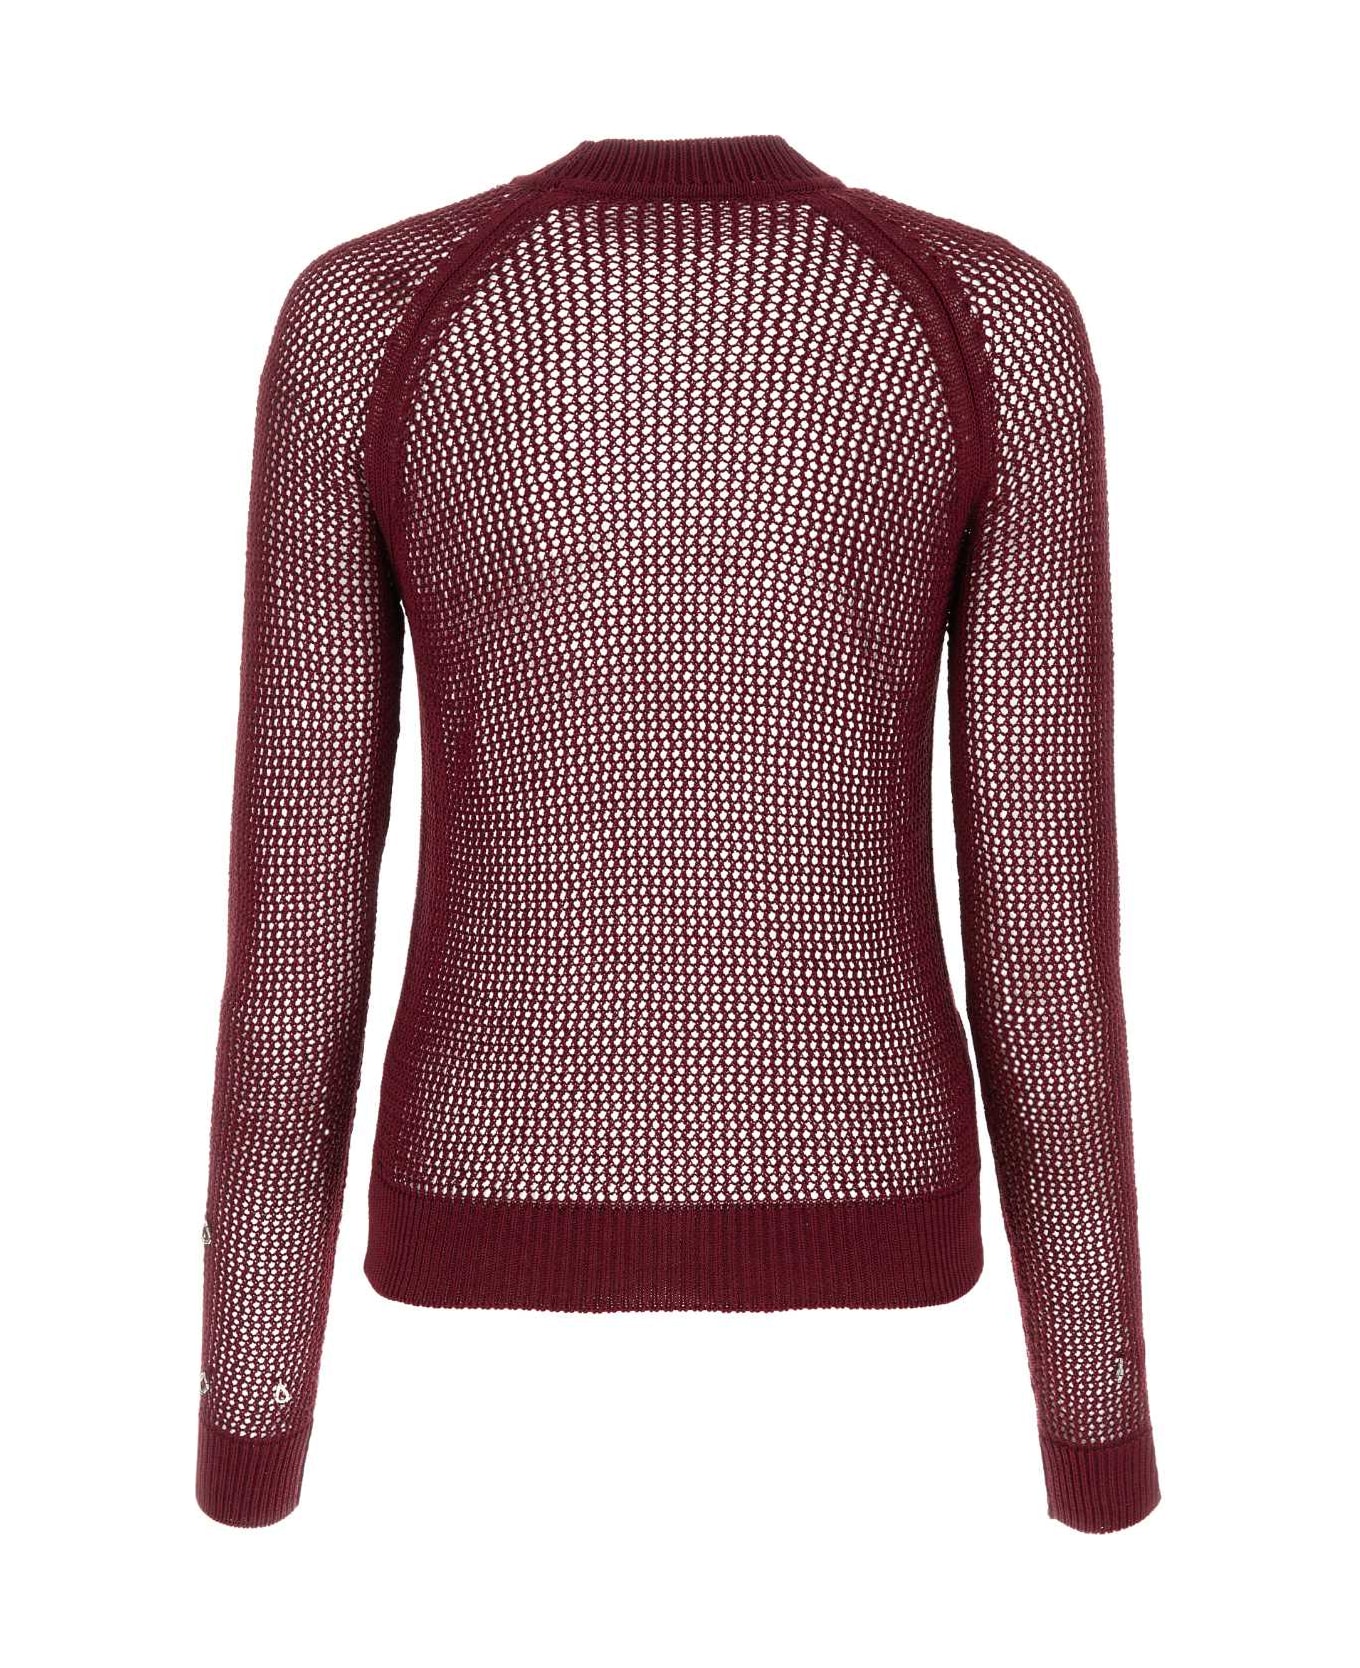 Durazzi Milano Burgundy Cotton Sweater - Red ニットウェア